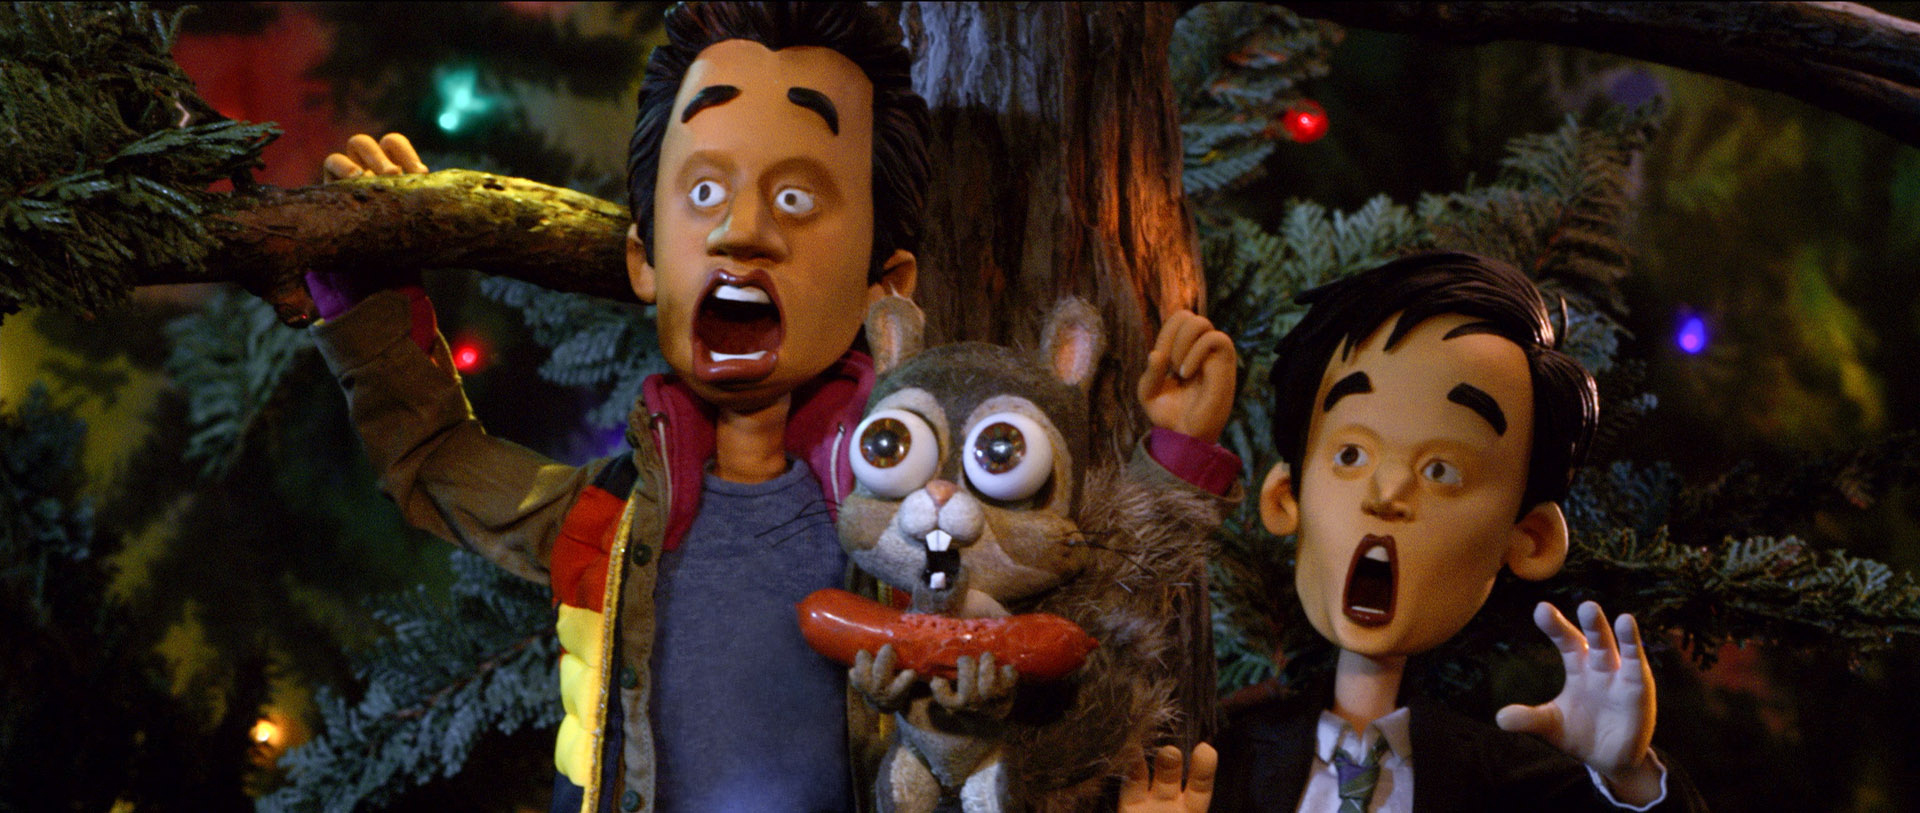 Still of John Cho and Kal Penn in A Very Harold & Kumar 3D Christmas (2011)